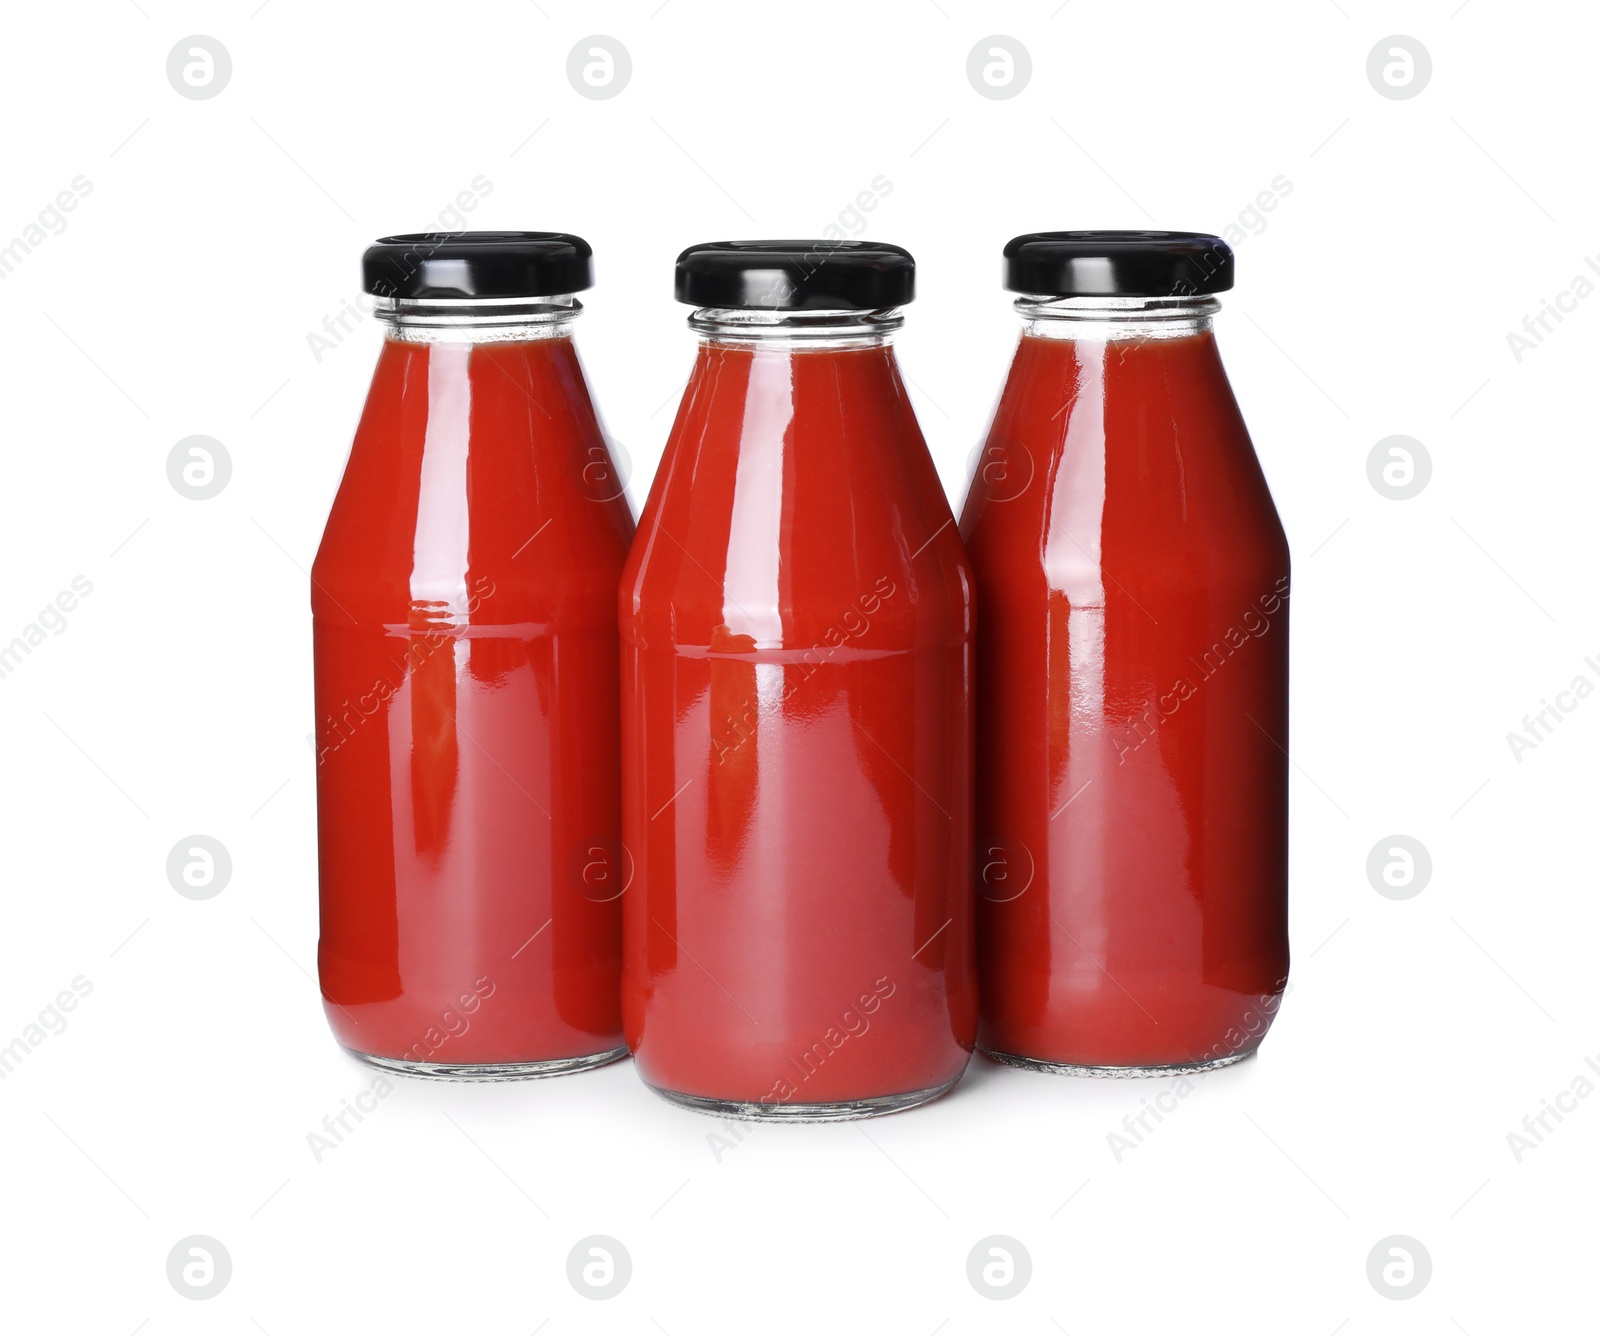 Photo of Bottles with tomato juice isolated on white